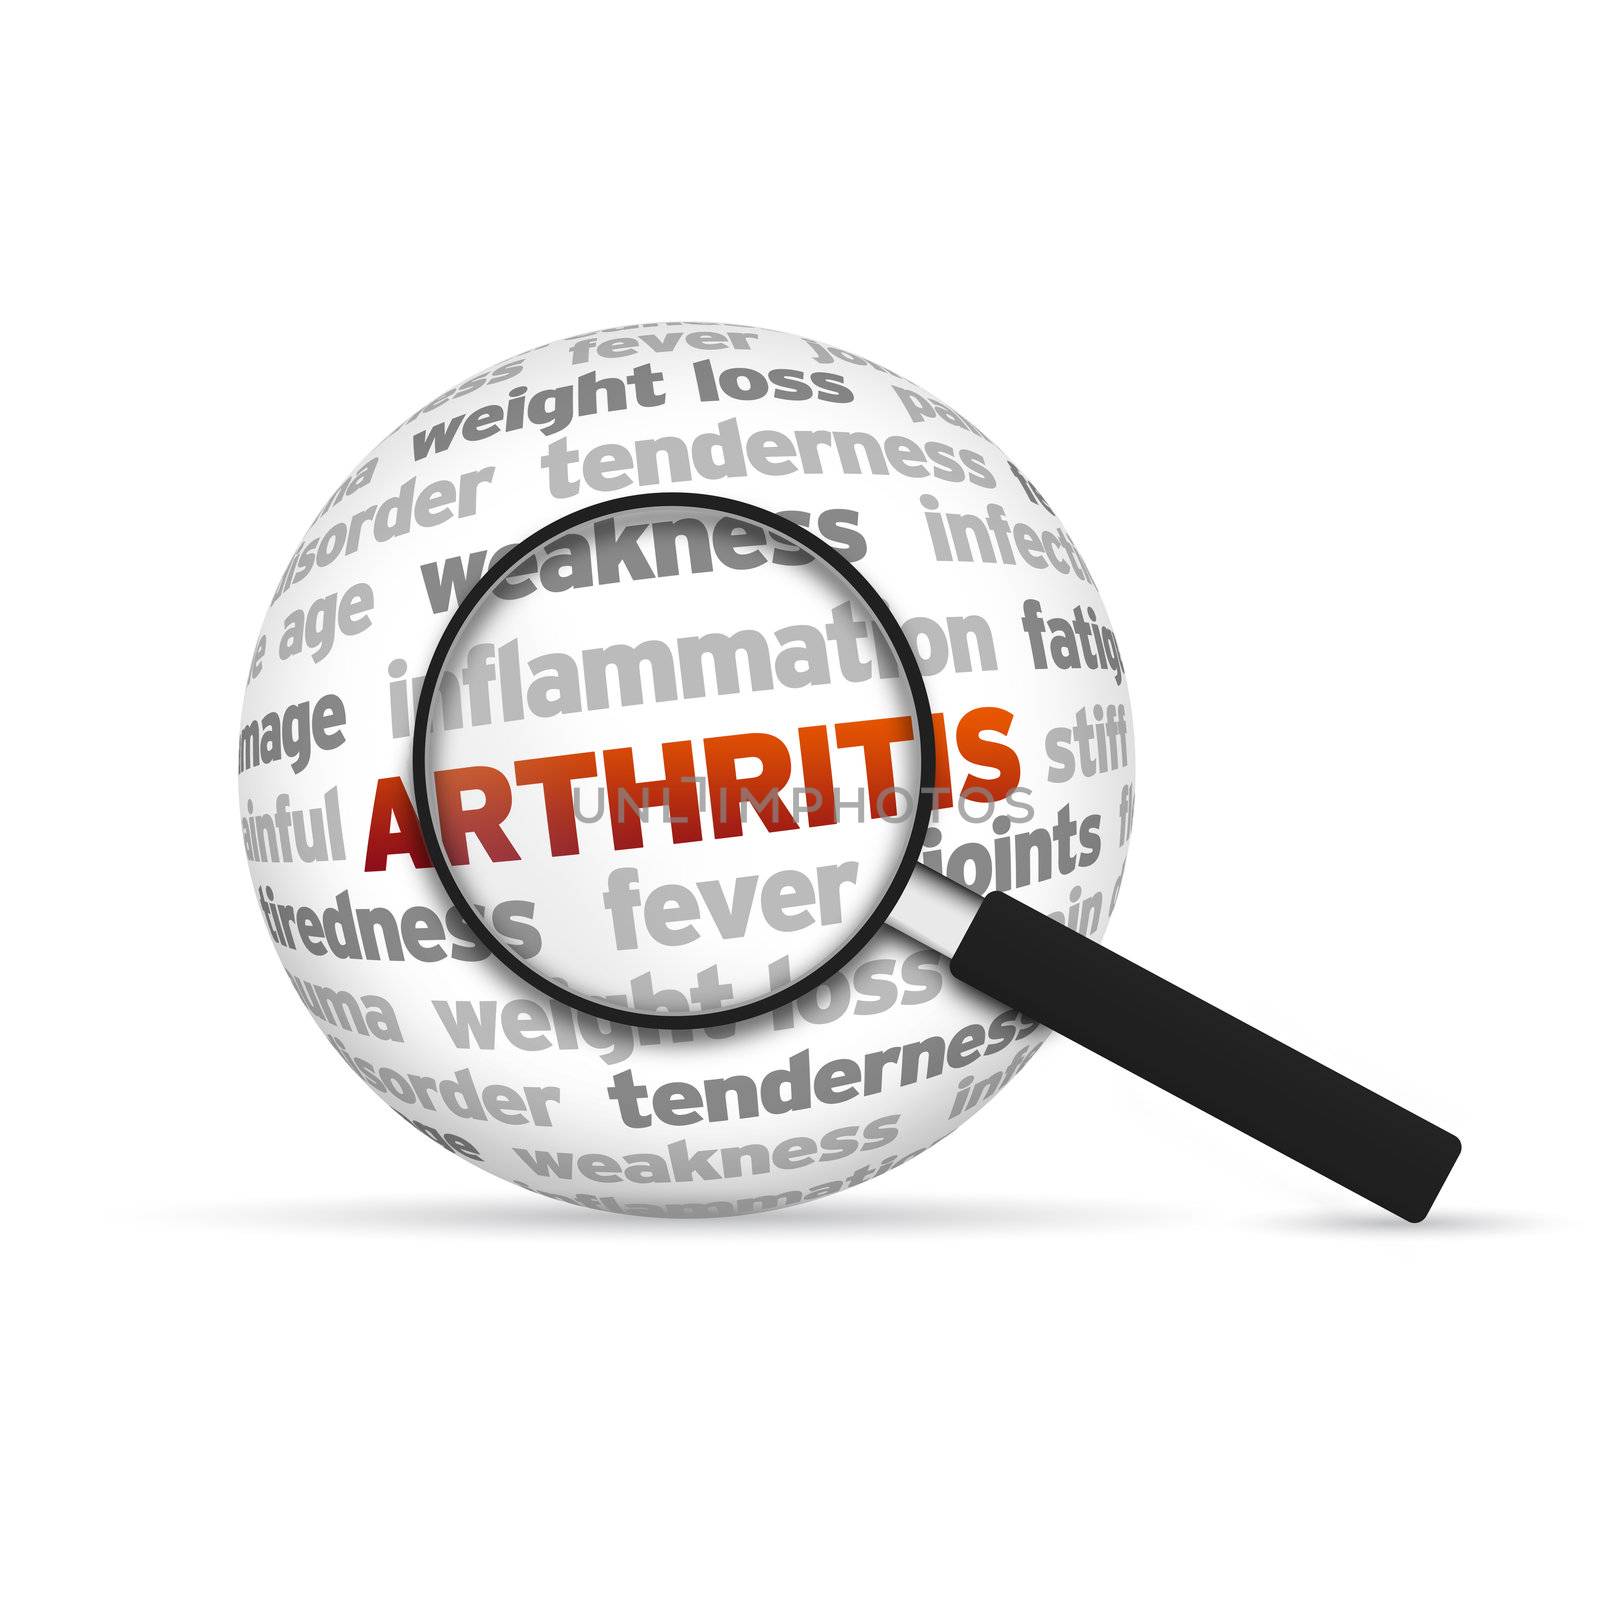 Arthritis by kbuntu